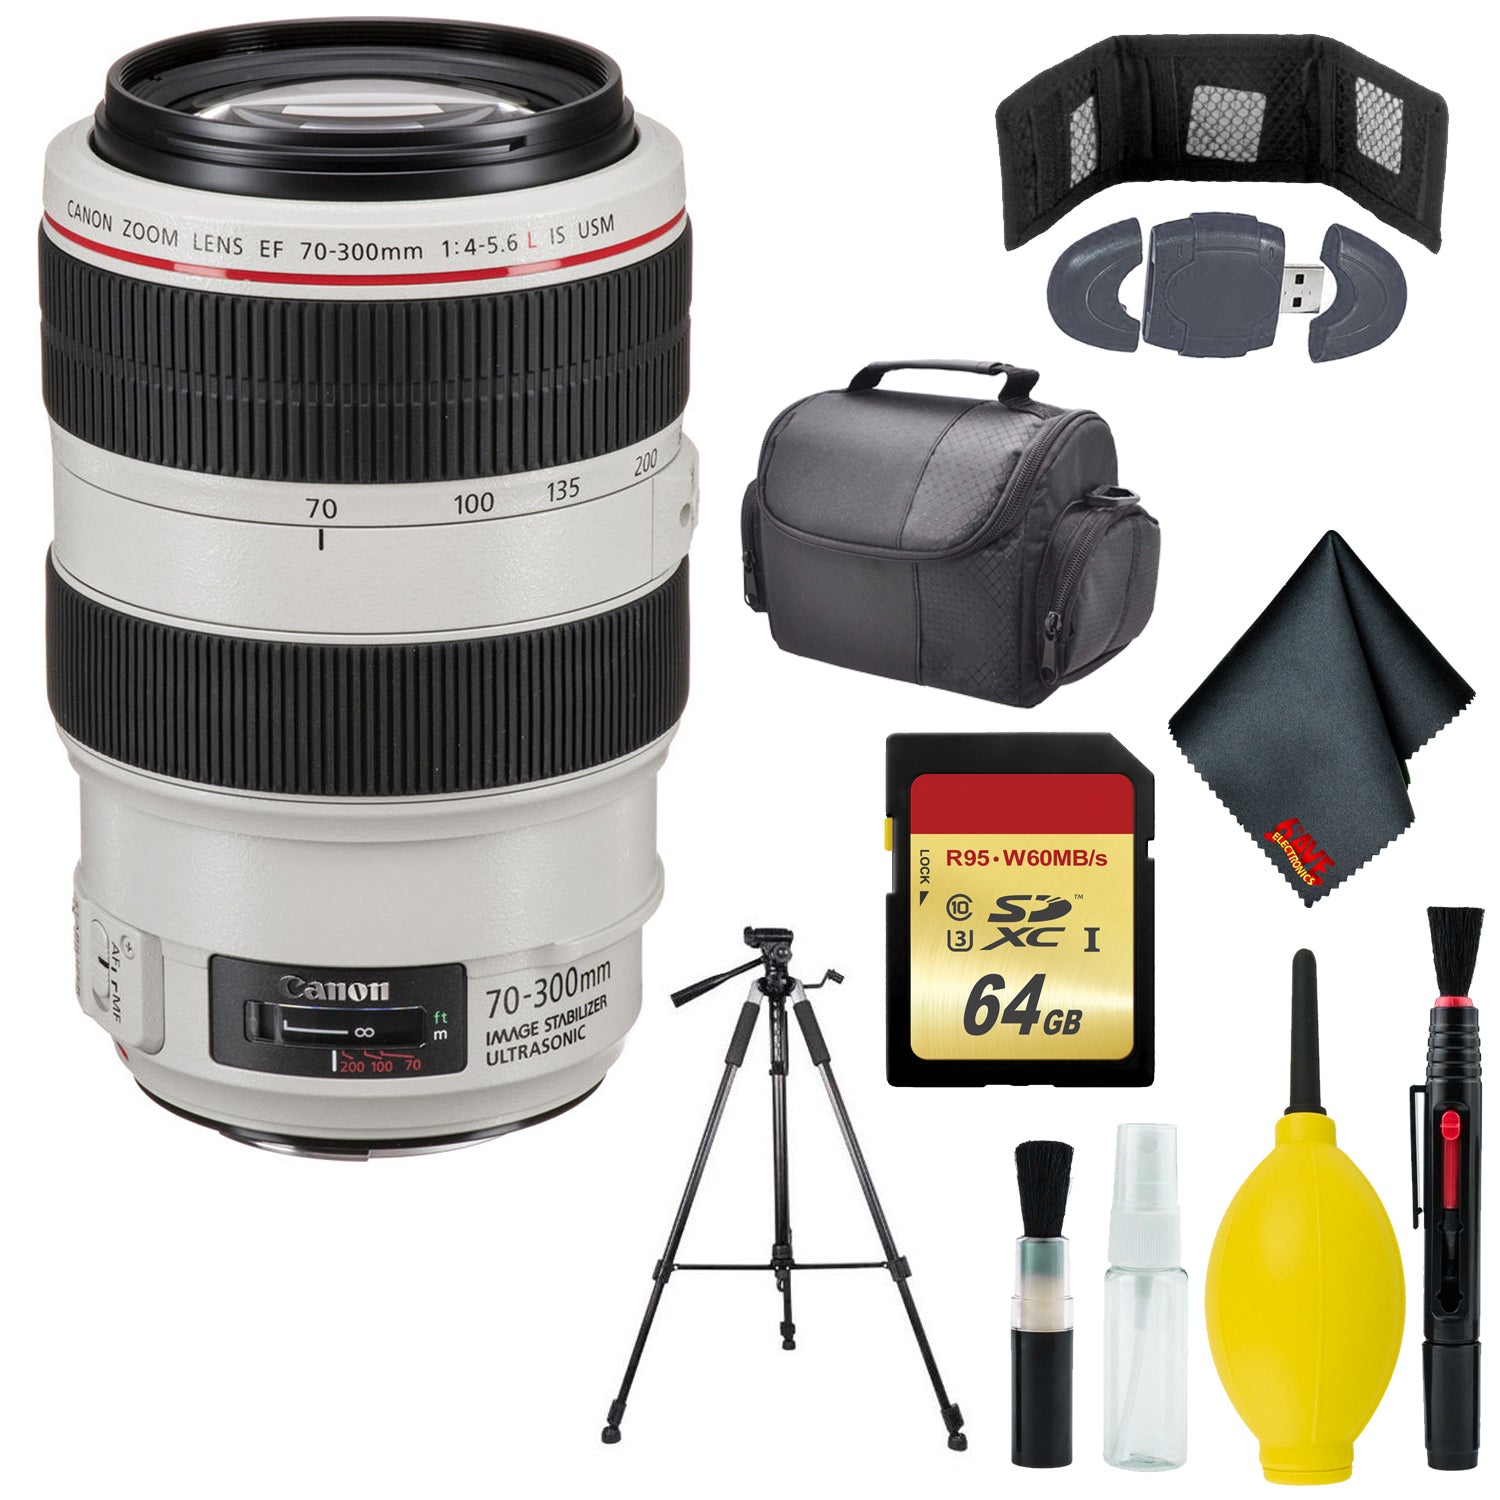 Canon EF 70-300mm f/4-5.6L IS USM Lens - Cleaning Kit - Memory Card Wallet & Reader - 64GB - CASE - 72